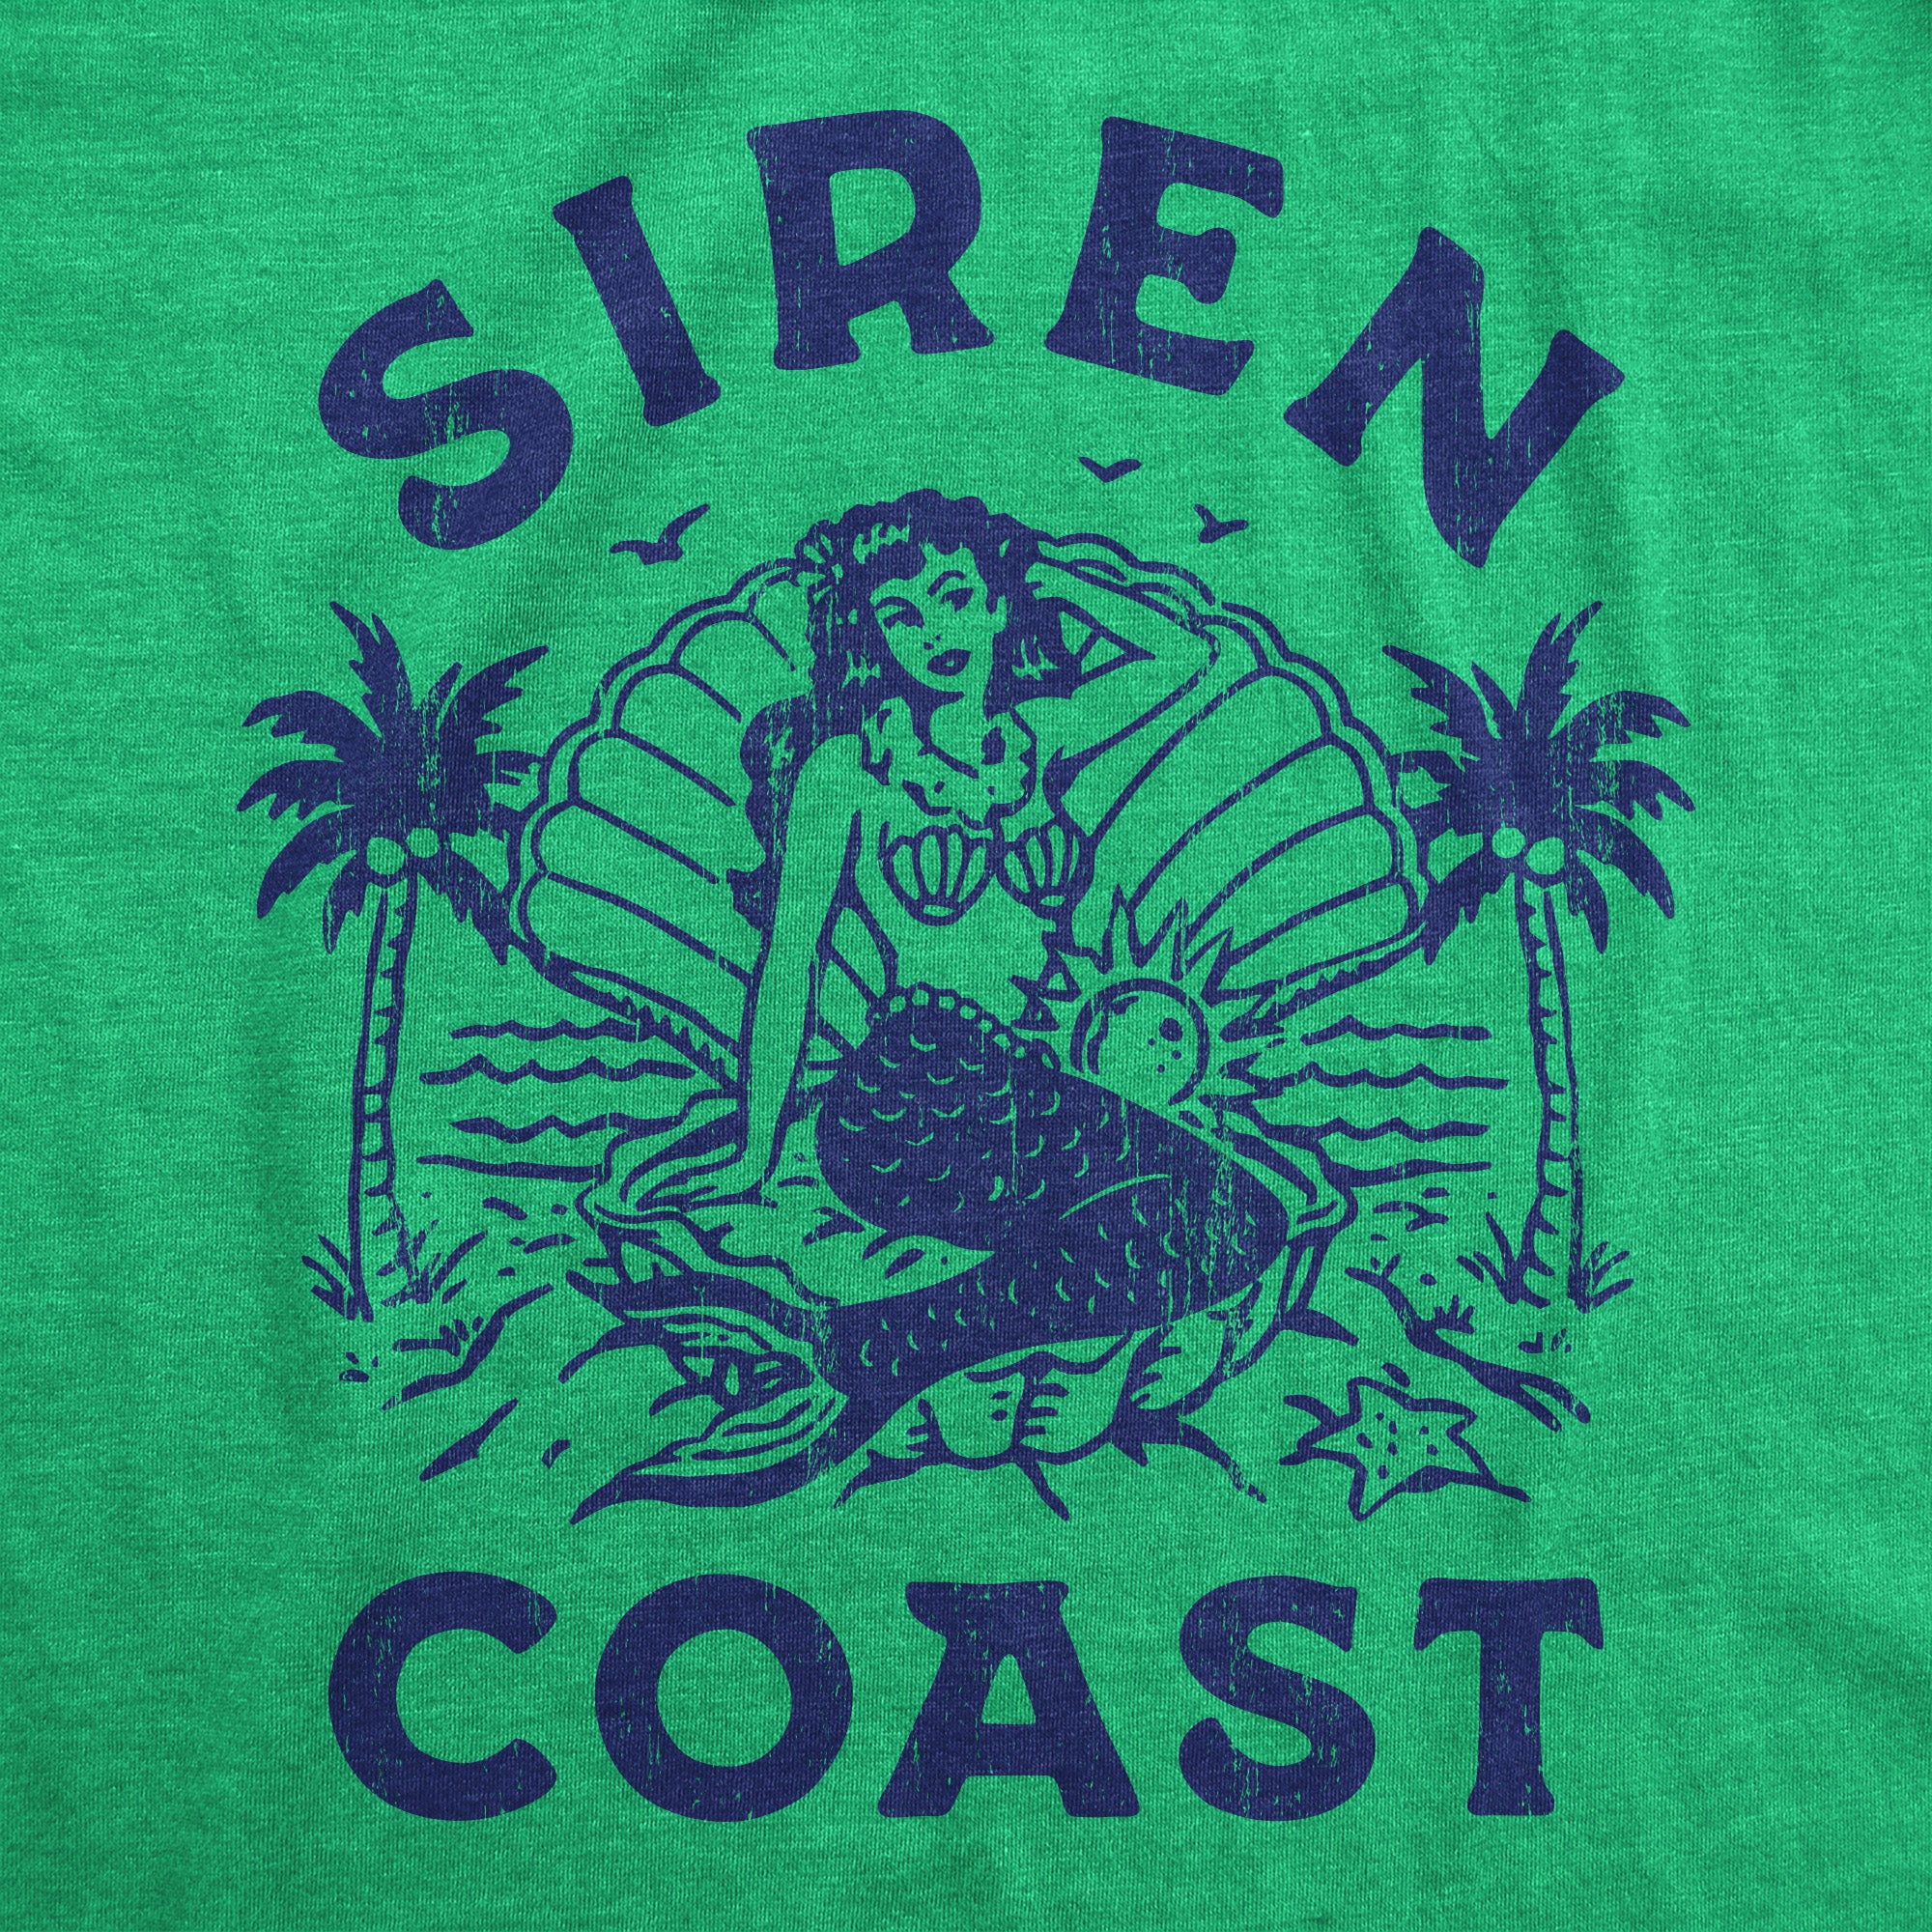 Funny Heather Green - Siren Coast Siren Coast Mens T Shirt Nerdy Sarcastic Tee